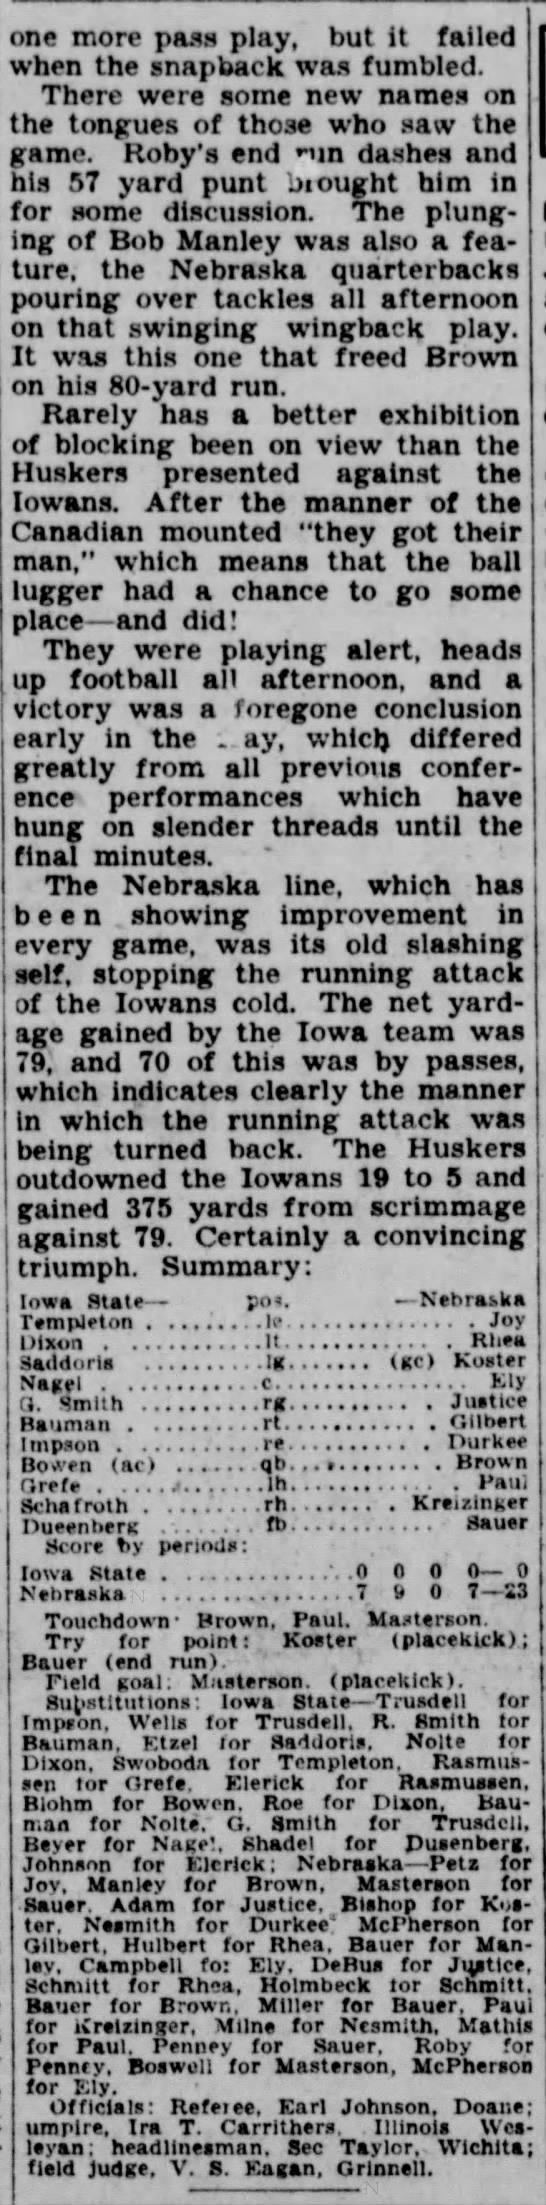 1931 Nebraska-Iowa State football part 3 - 